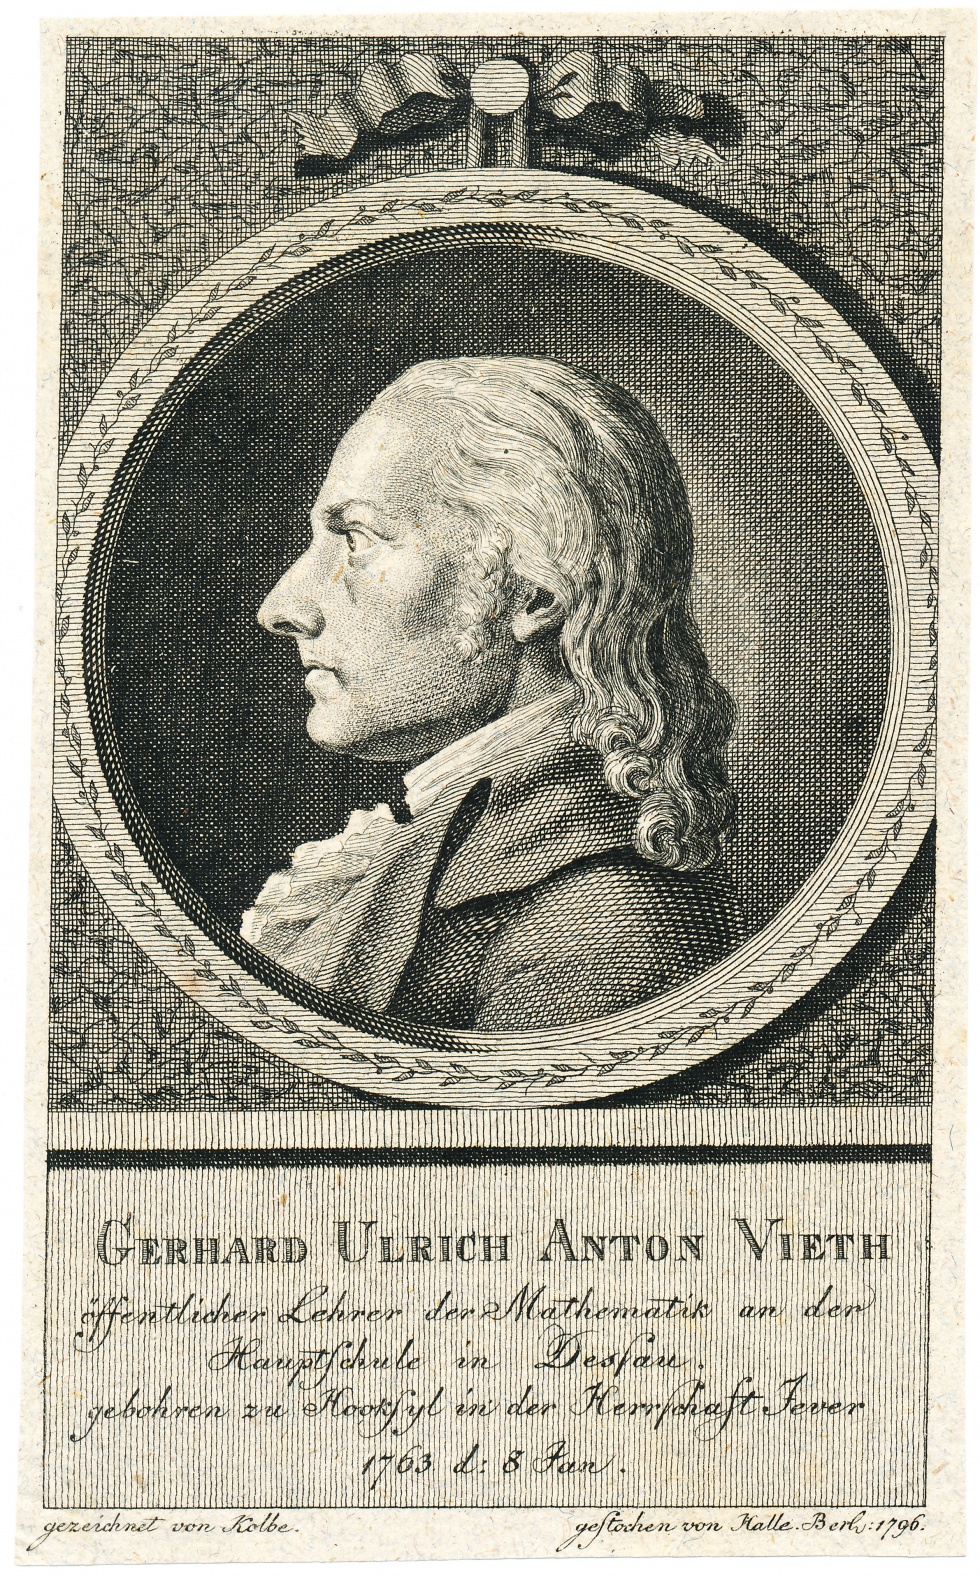 "GERHARD ULRICH ANTON VIETH" (Schlossmuseum Jever CC BY-NC-SA)